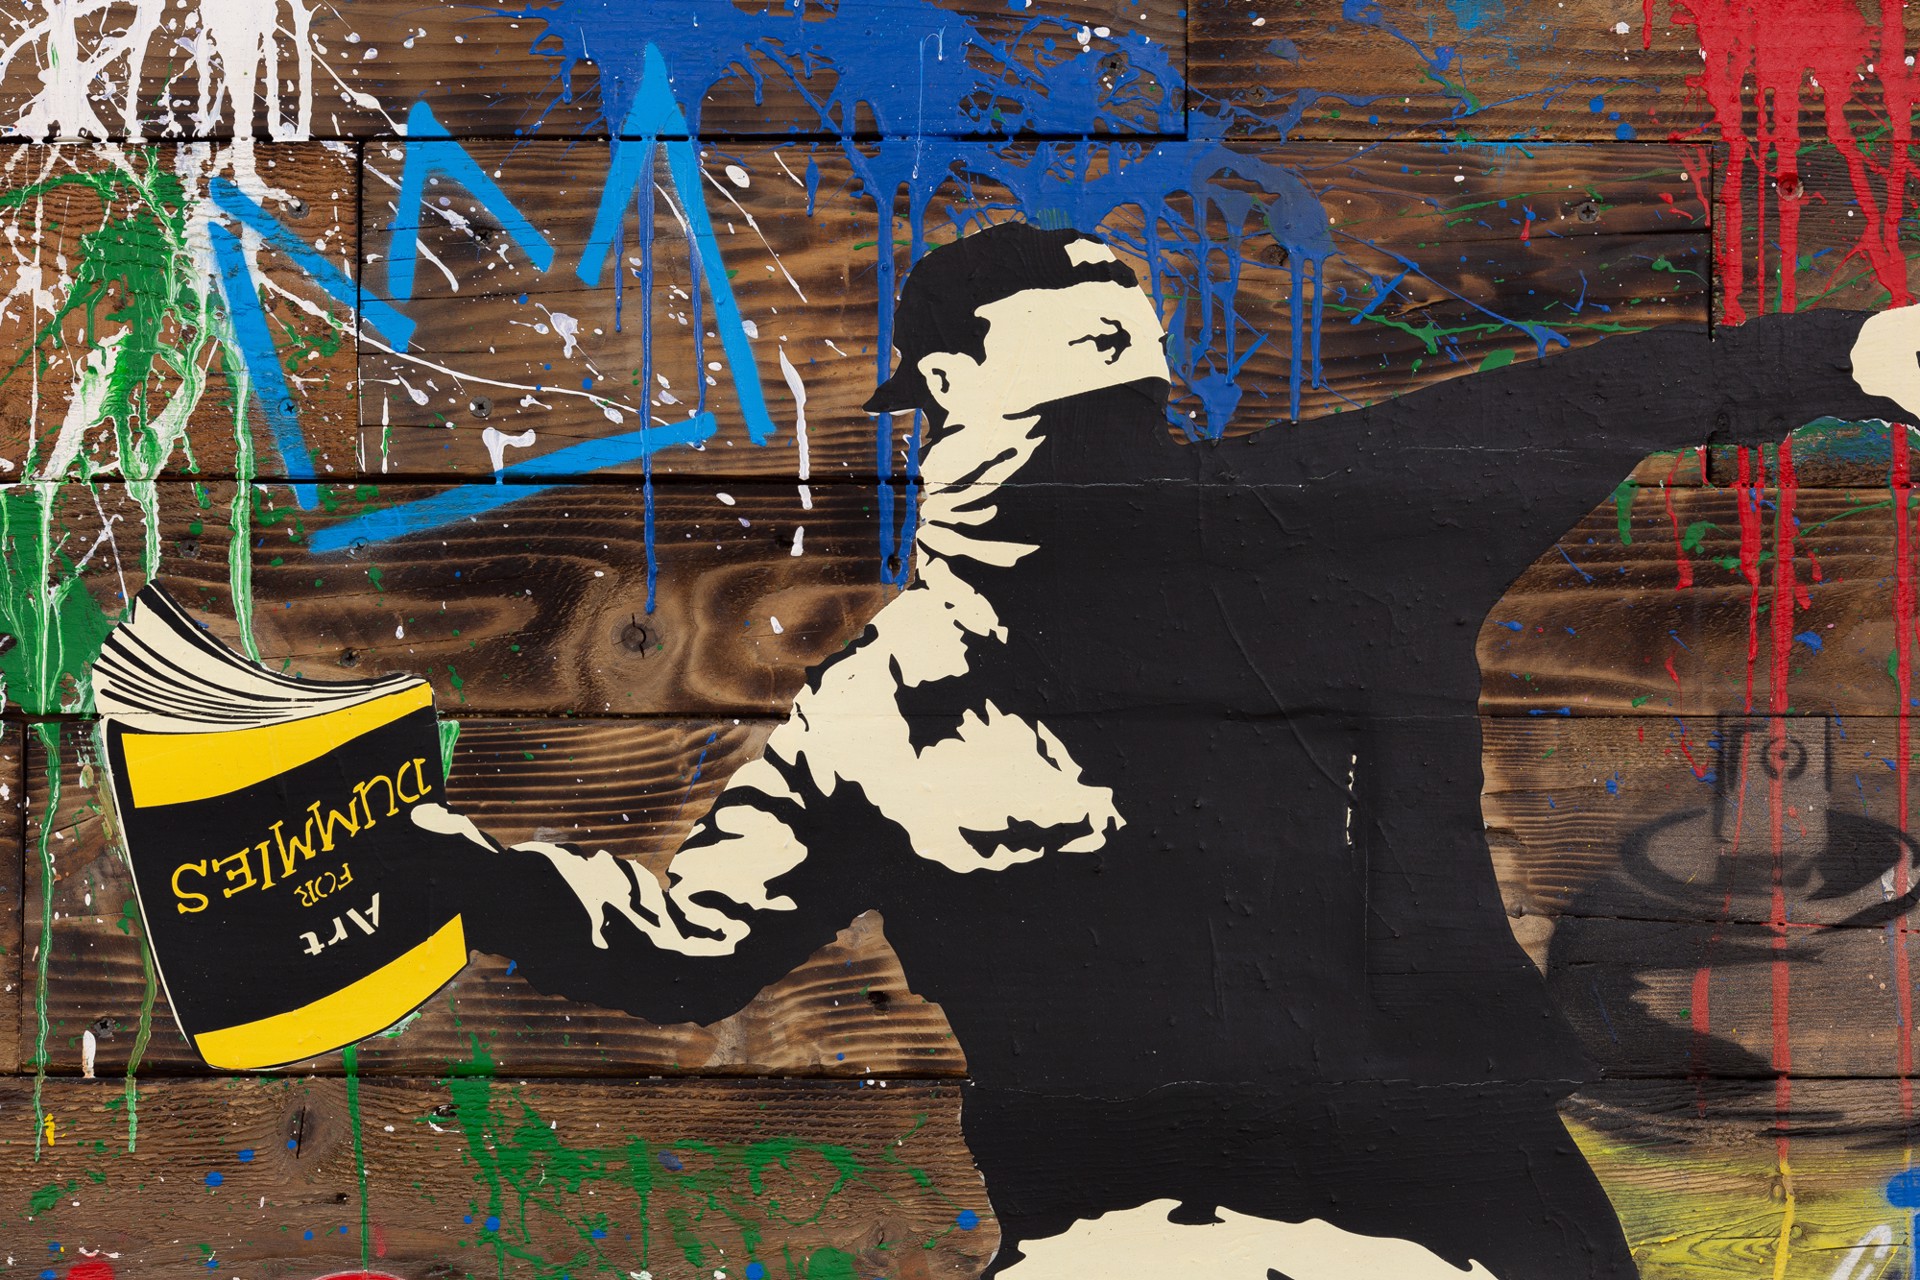 Banksy Thrower by Mr. Brainwash